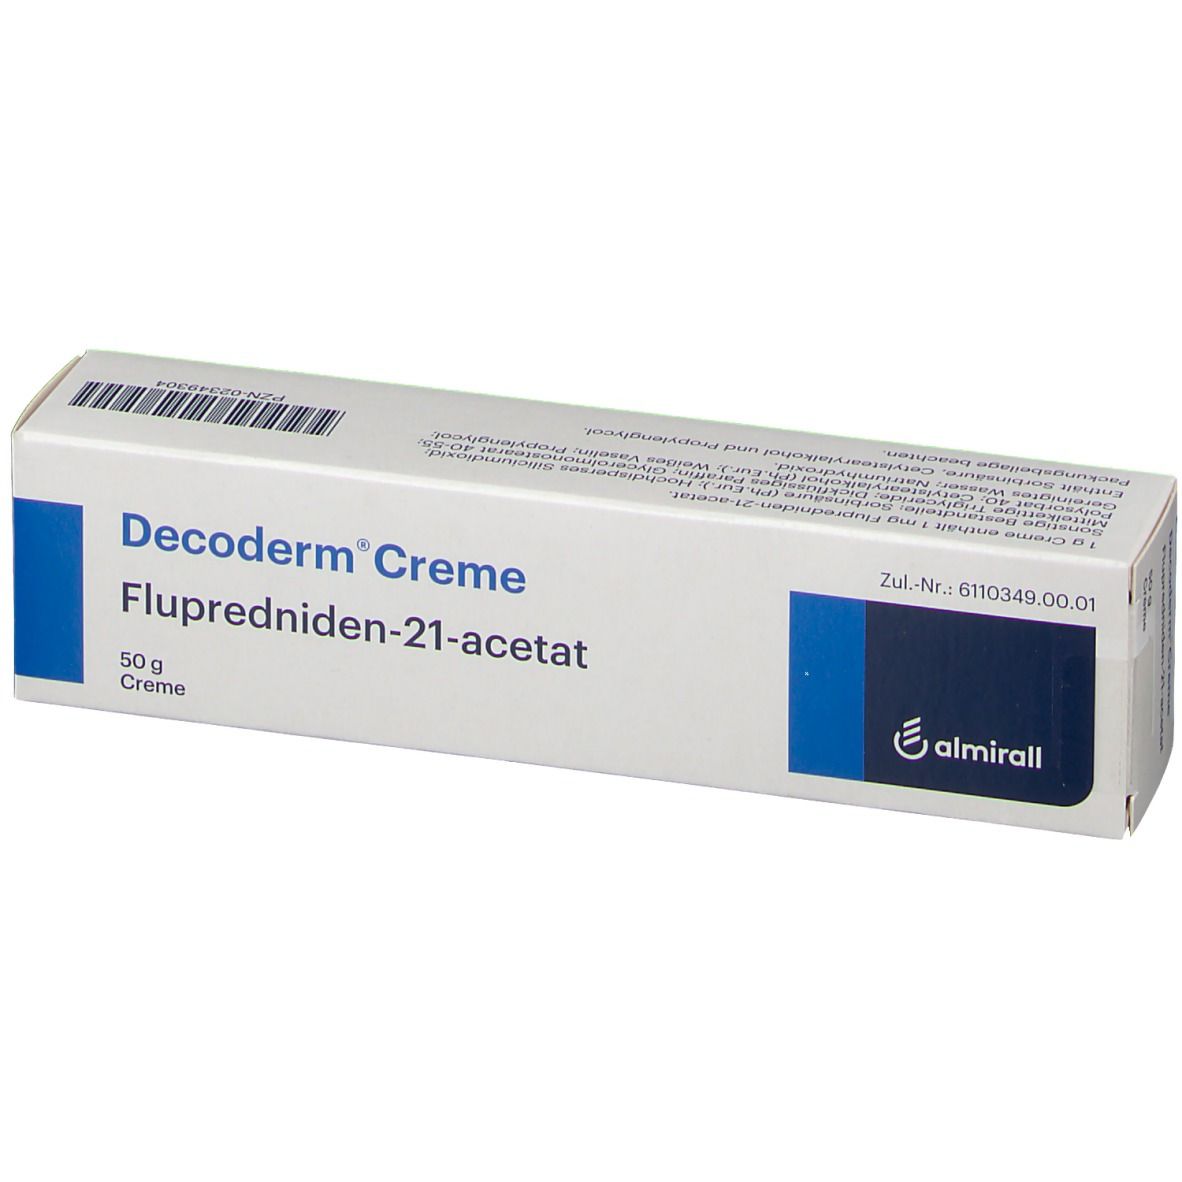 Decoderm® Creme